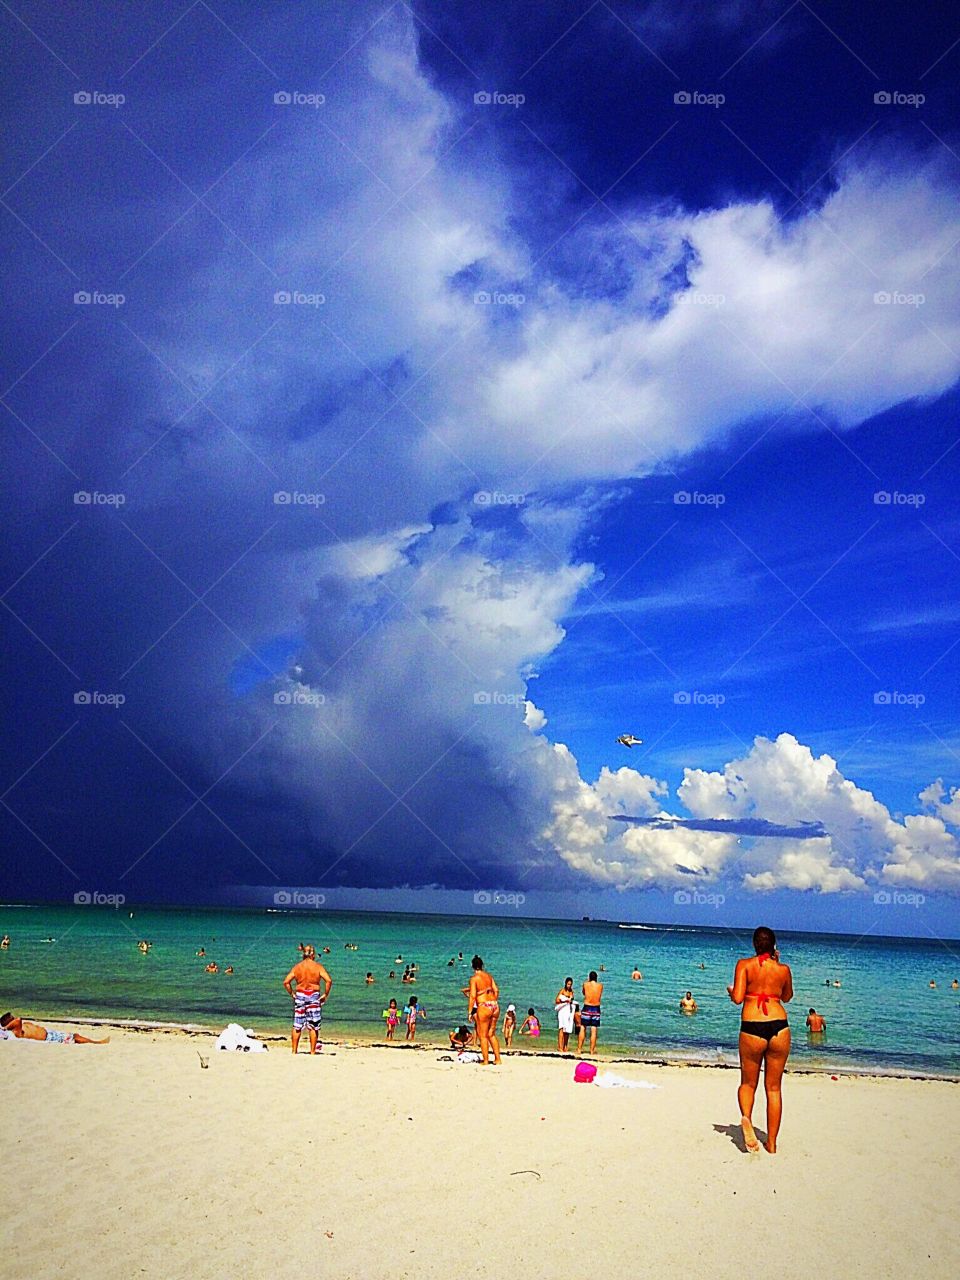 Miami beach storm